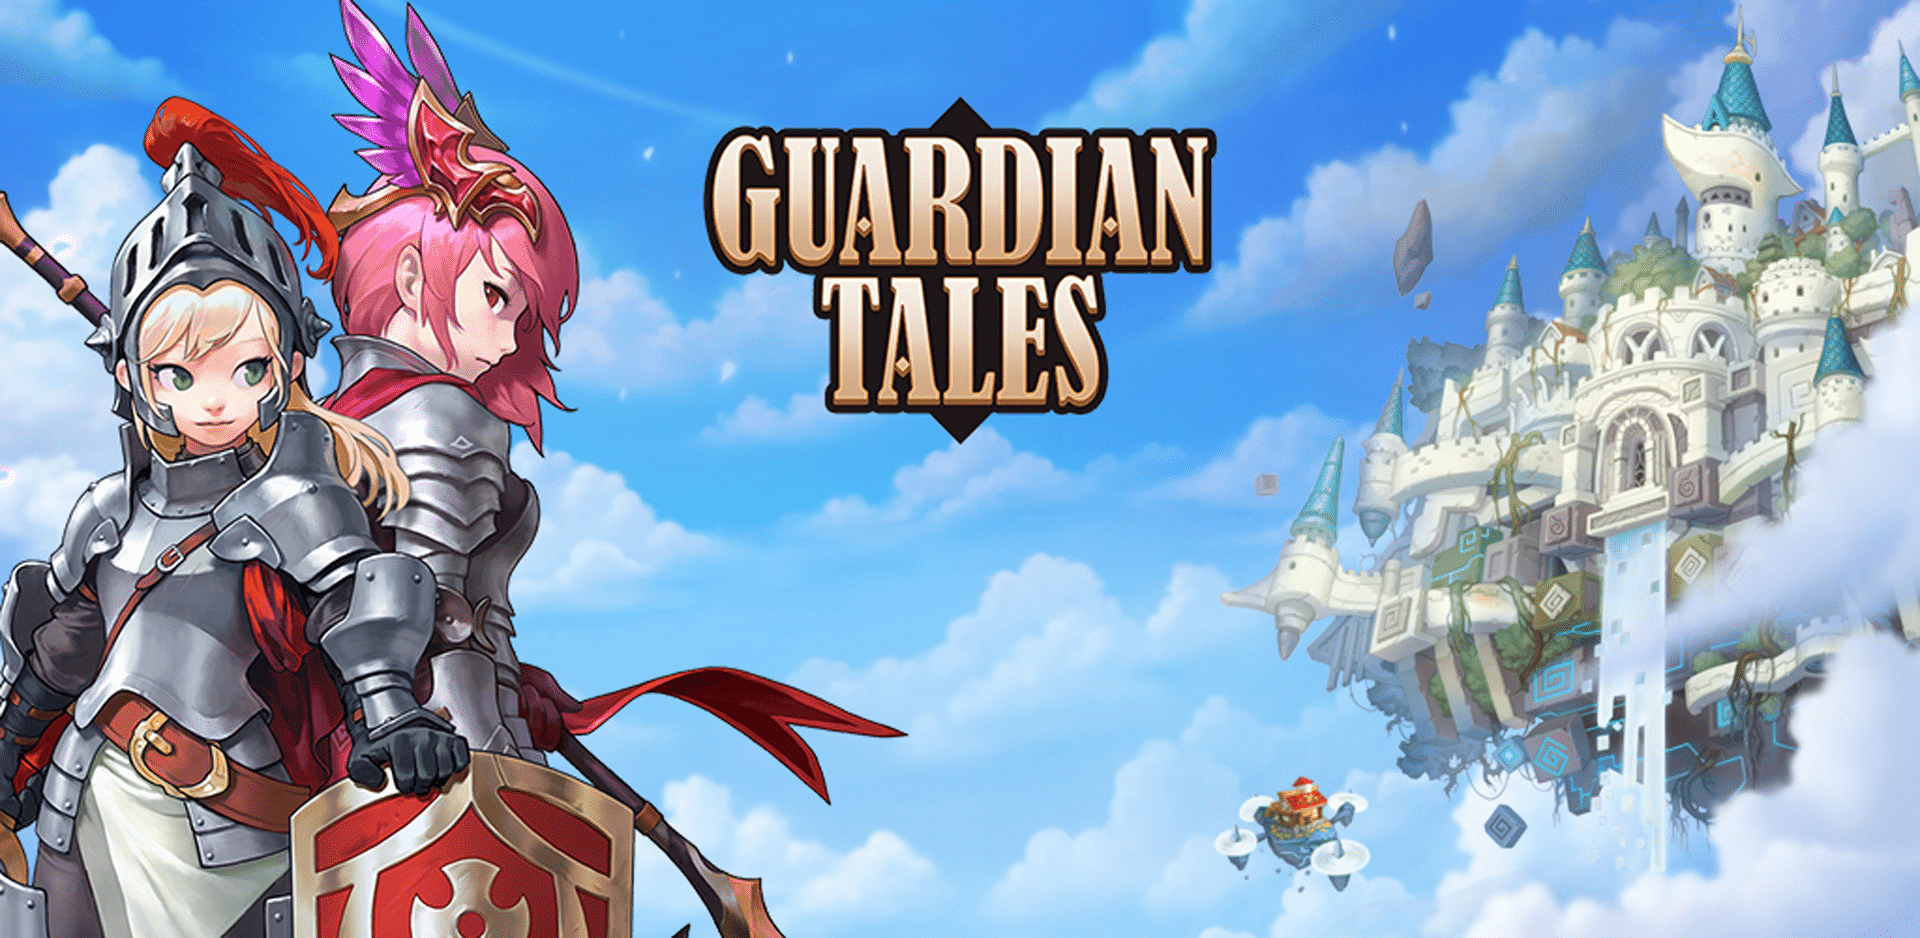 Guardian tales, o rpg de aventura chega ao mobile | de34699e image | married games notícias | guardian tales